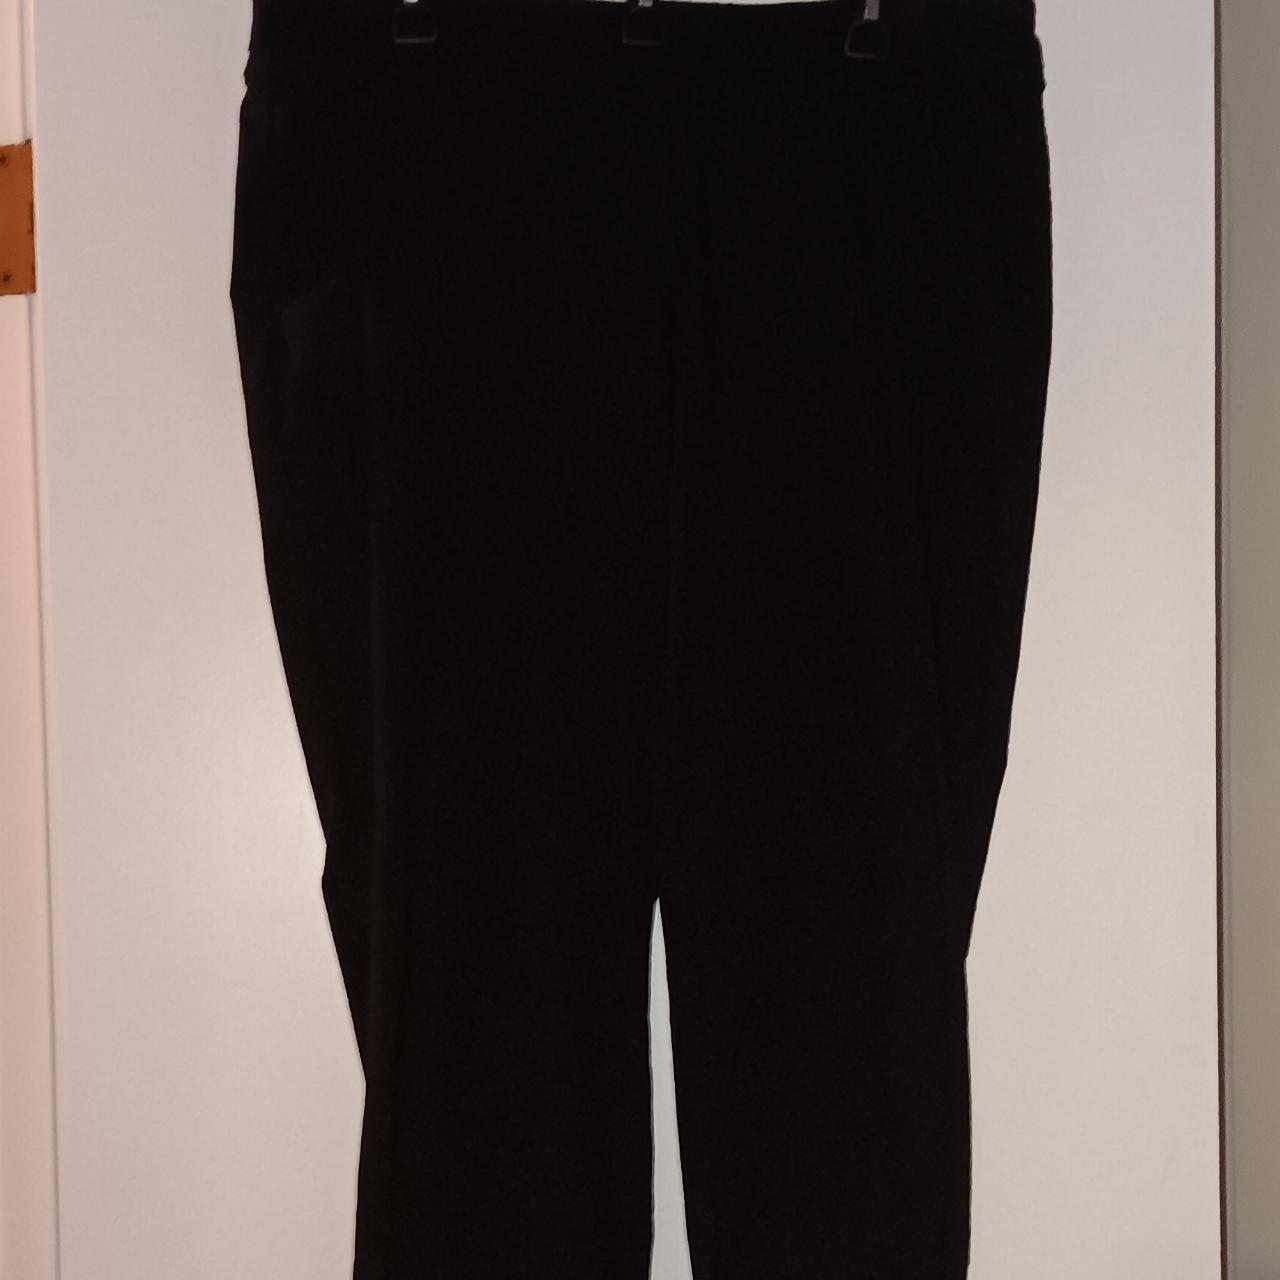 Hilary Radley Black Dress Pants. Size 16. New... - Depop